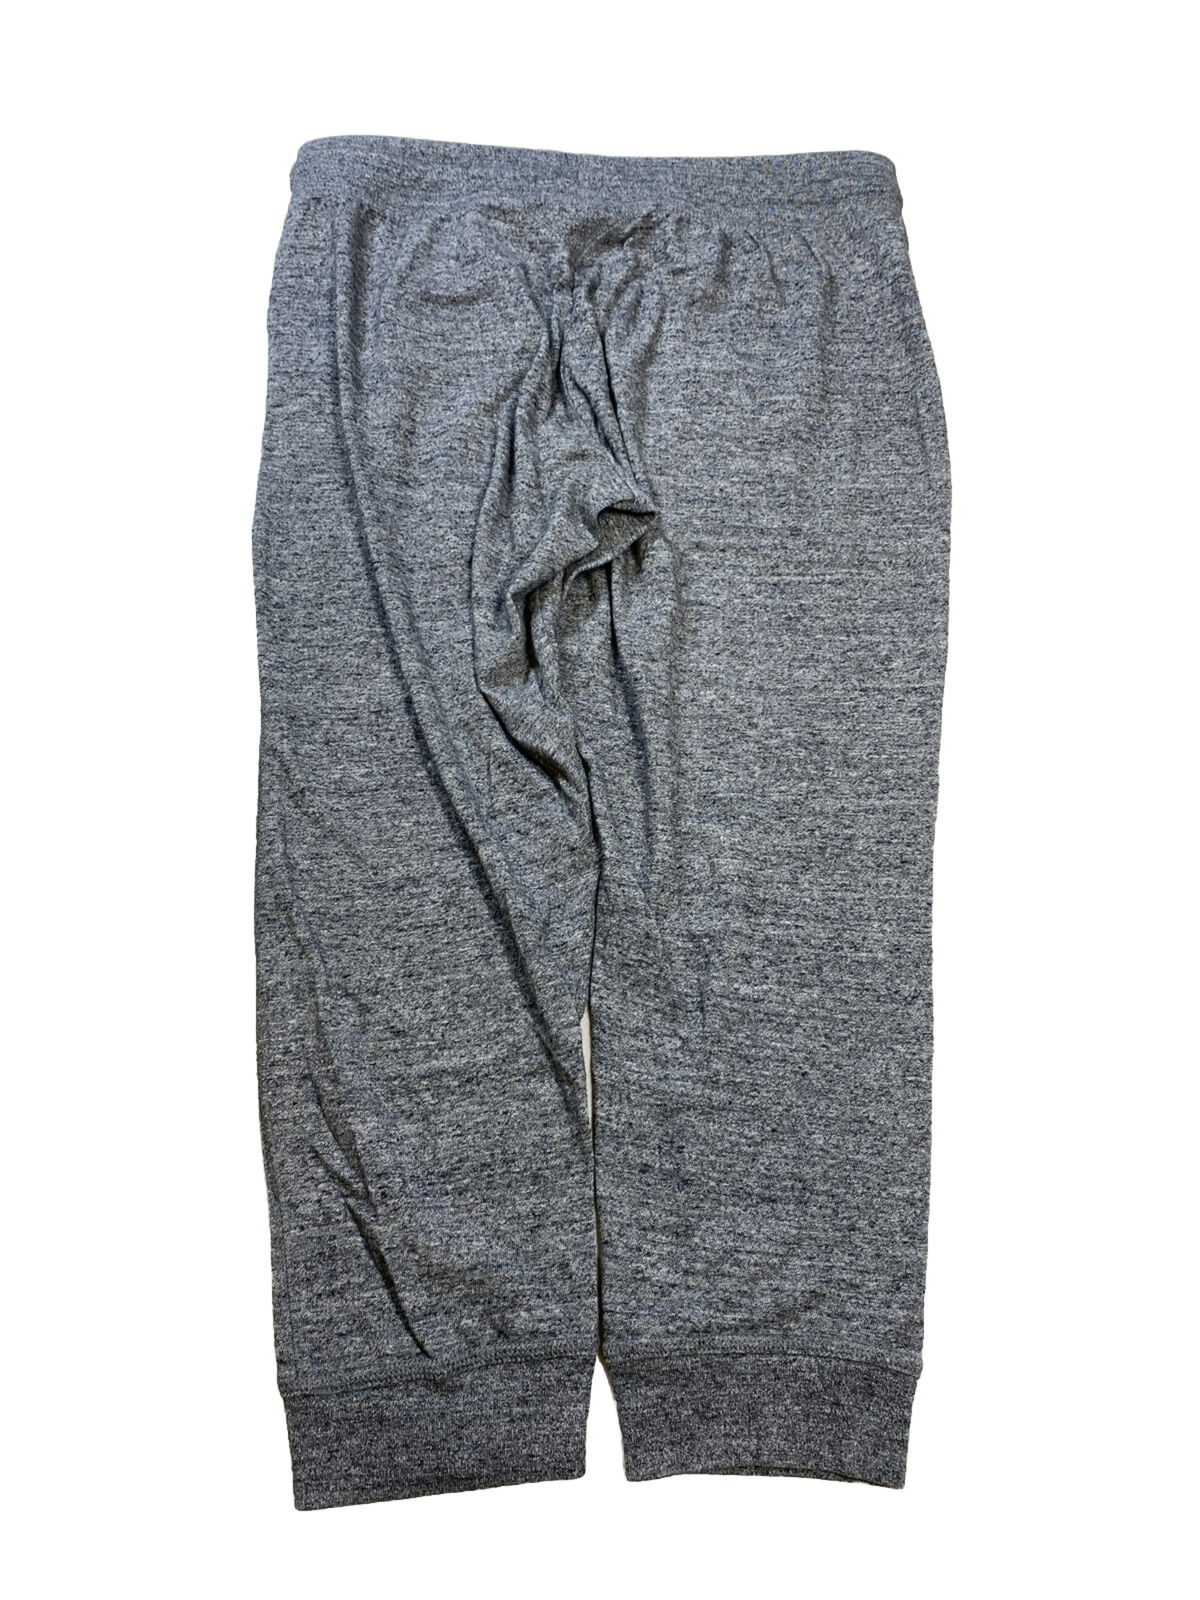 Nike Women's Gray Thin Cotton Crop Sweatpants - S